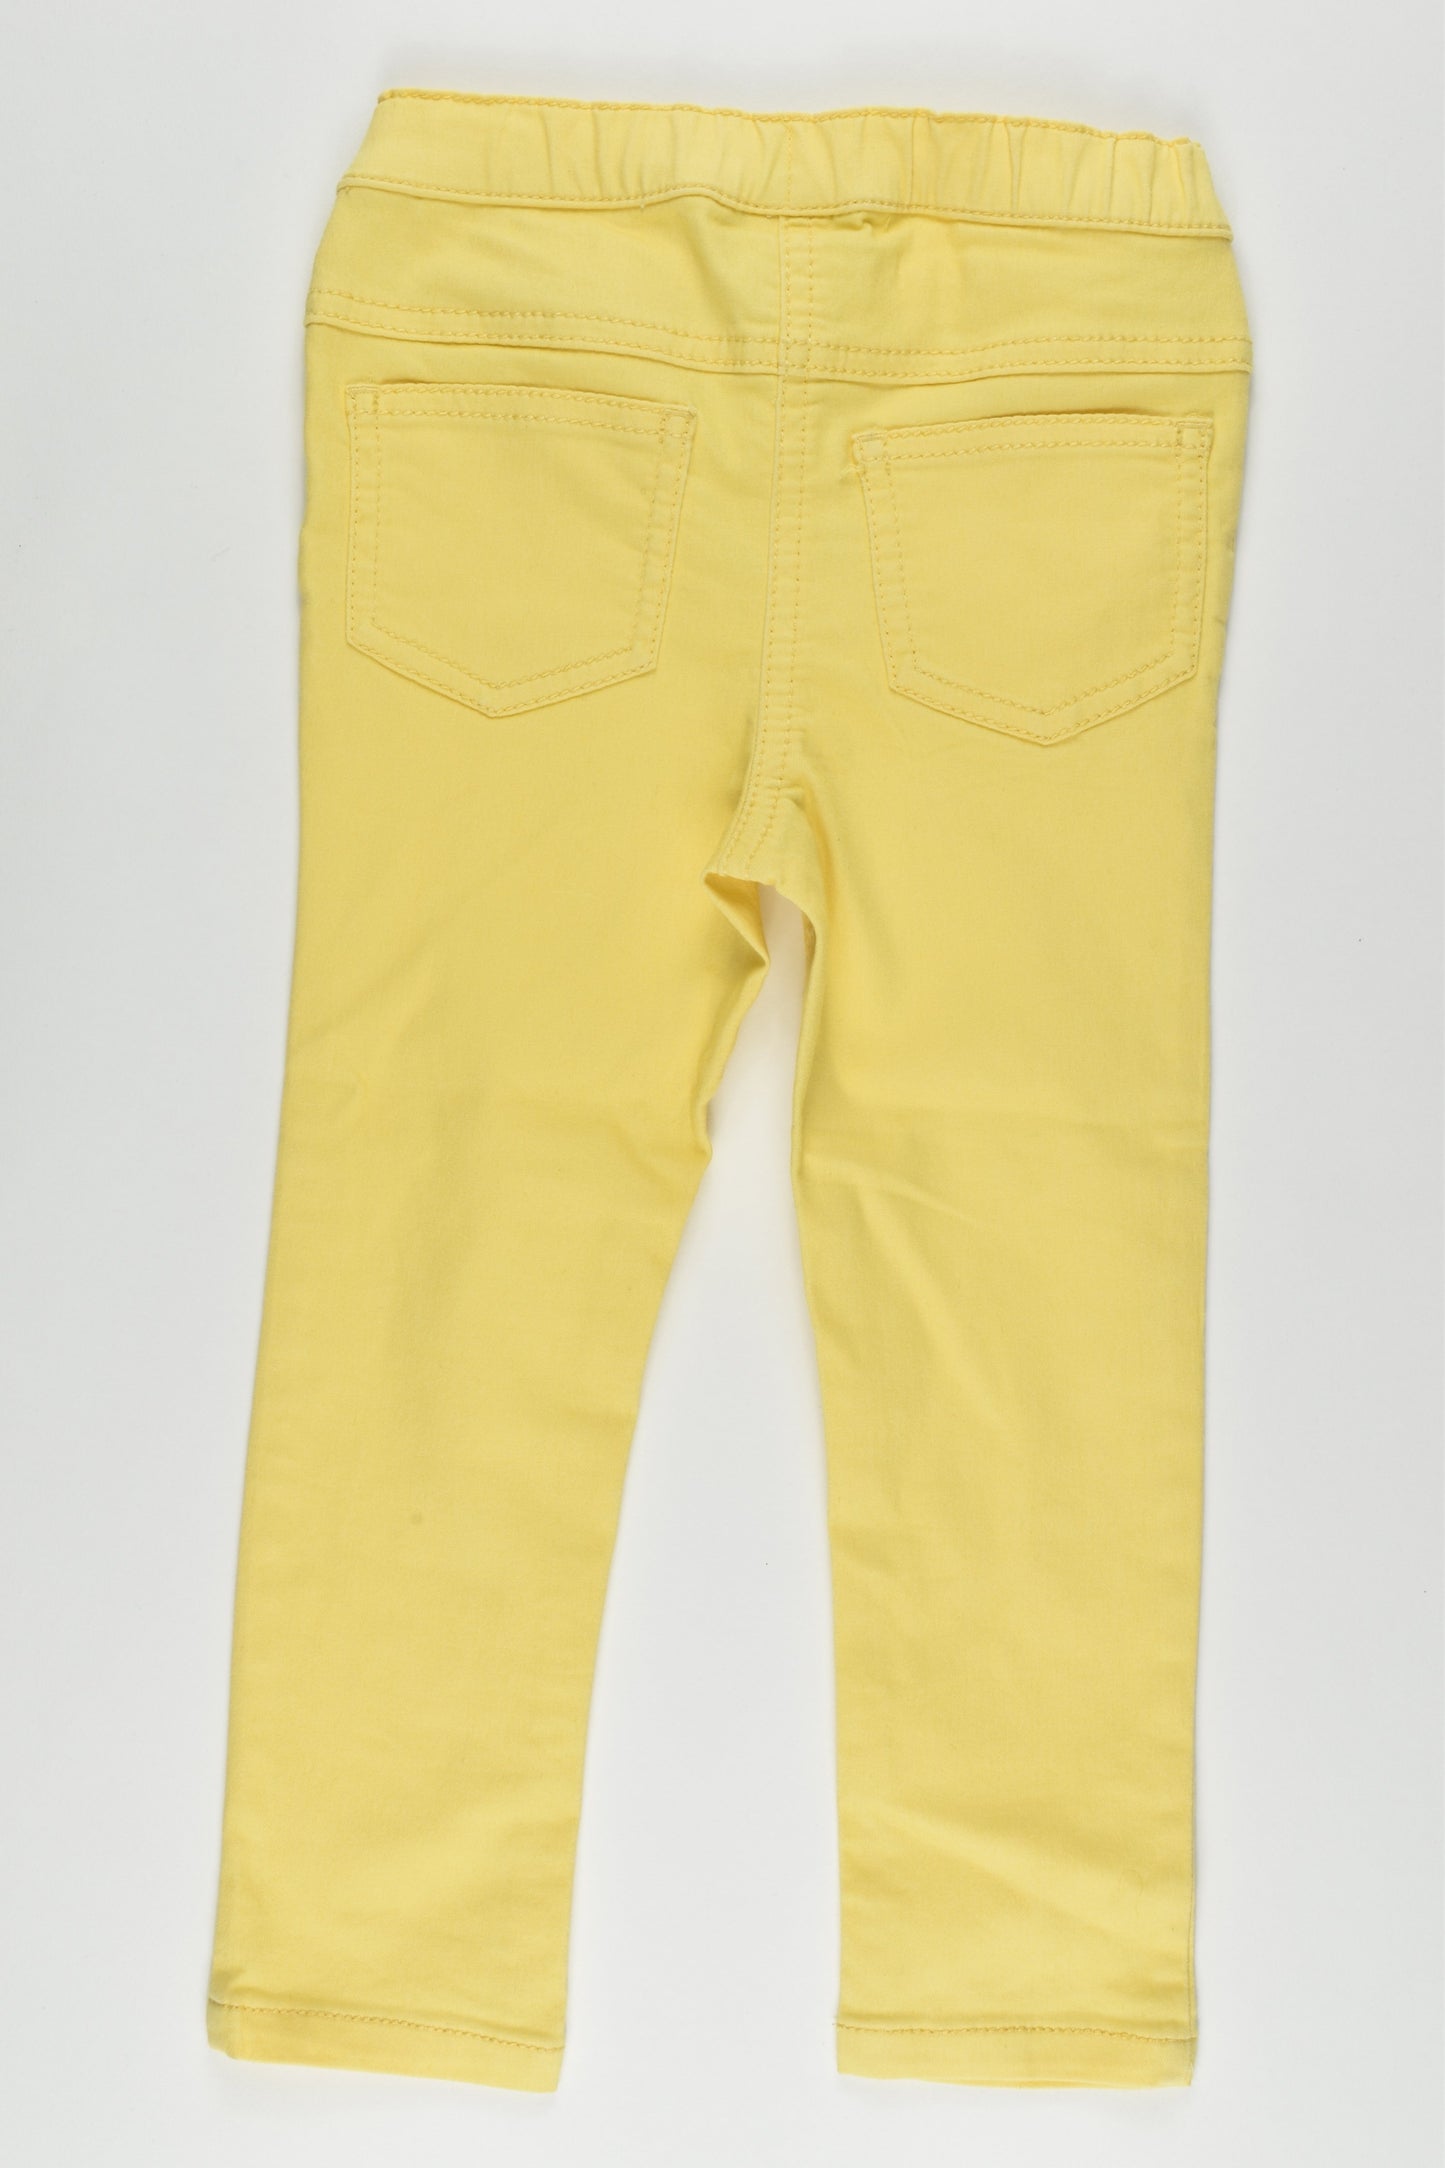 Next Size 2-3 (98 cm) Stretchy Pants